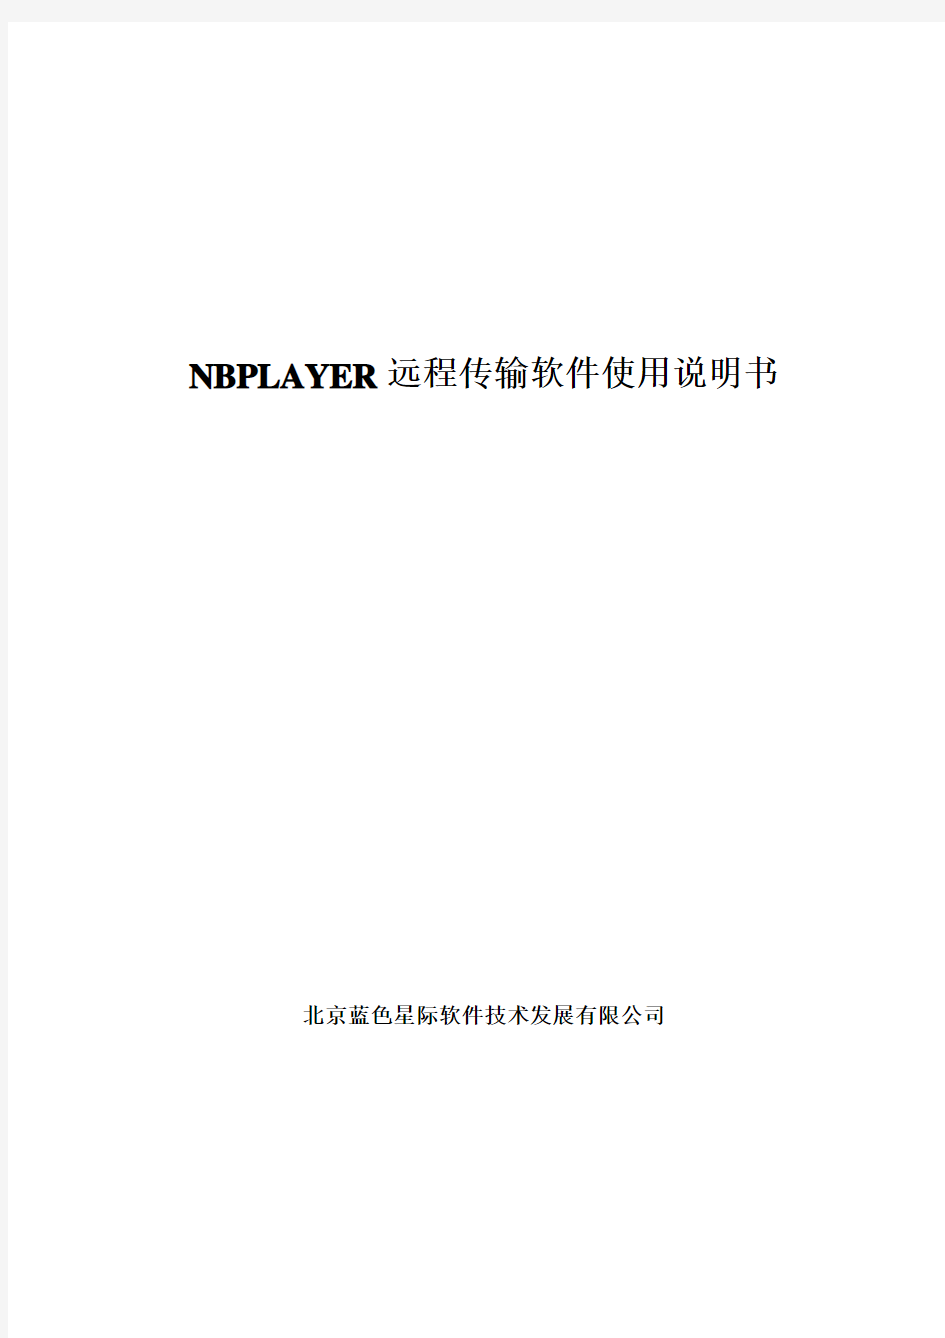 NBplayer远程传输应用软件使用说明书